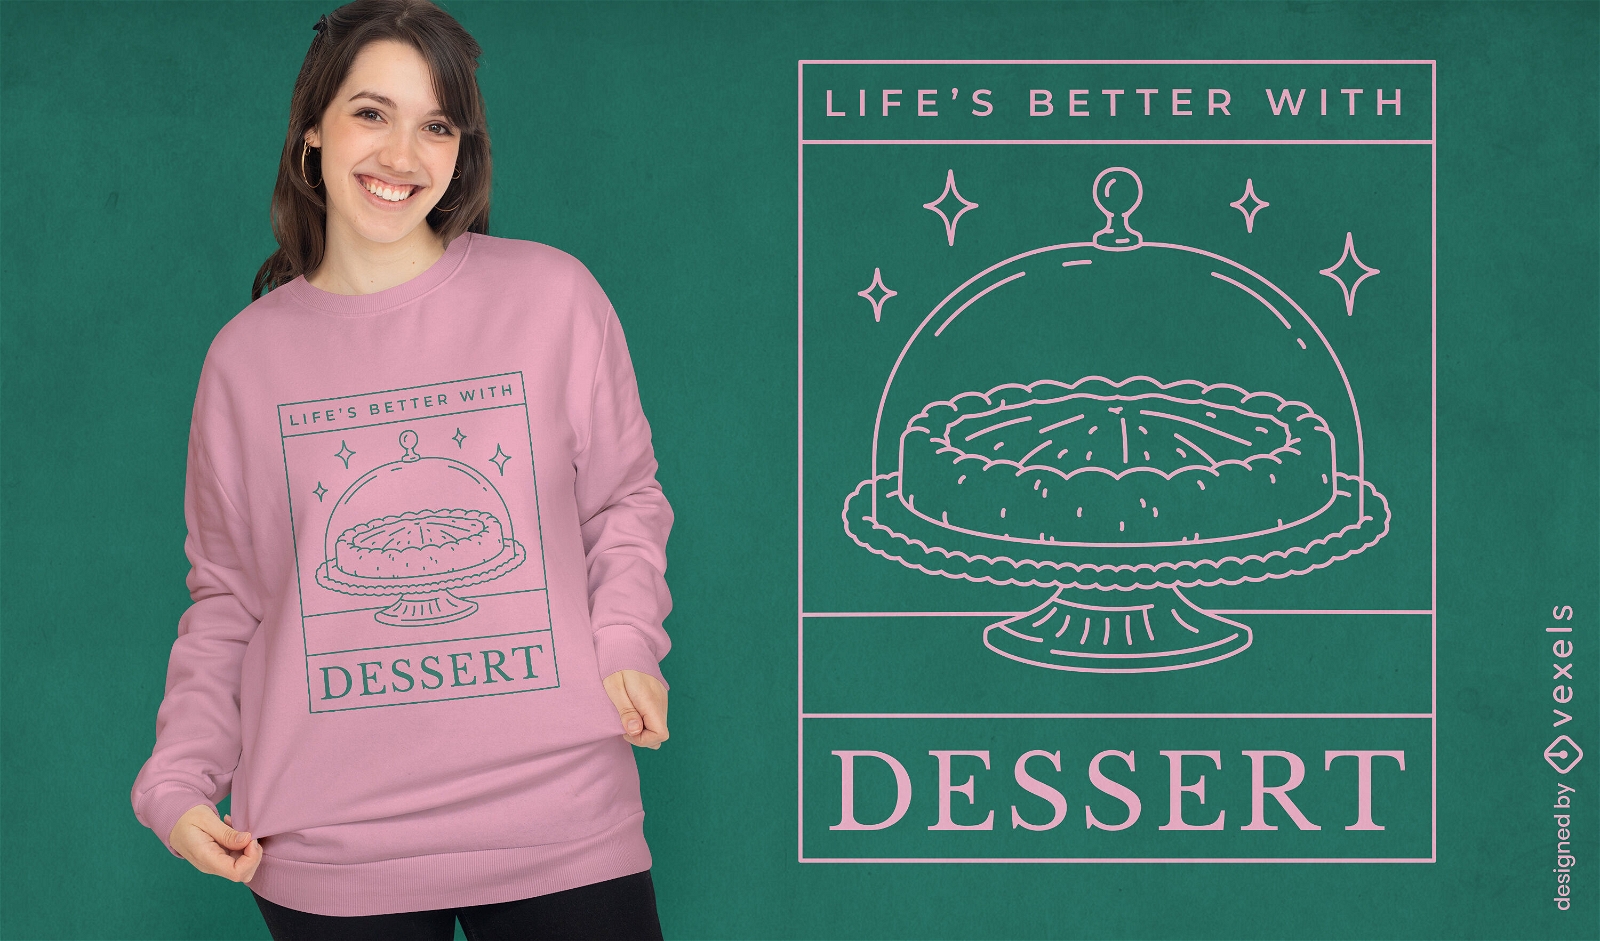 A vida ? melhor com design de t-shirt de sobremesa